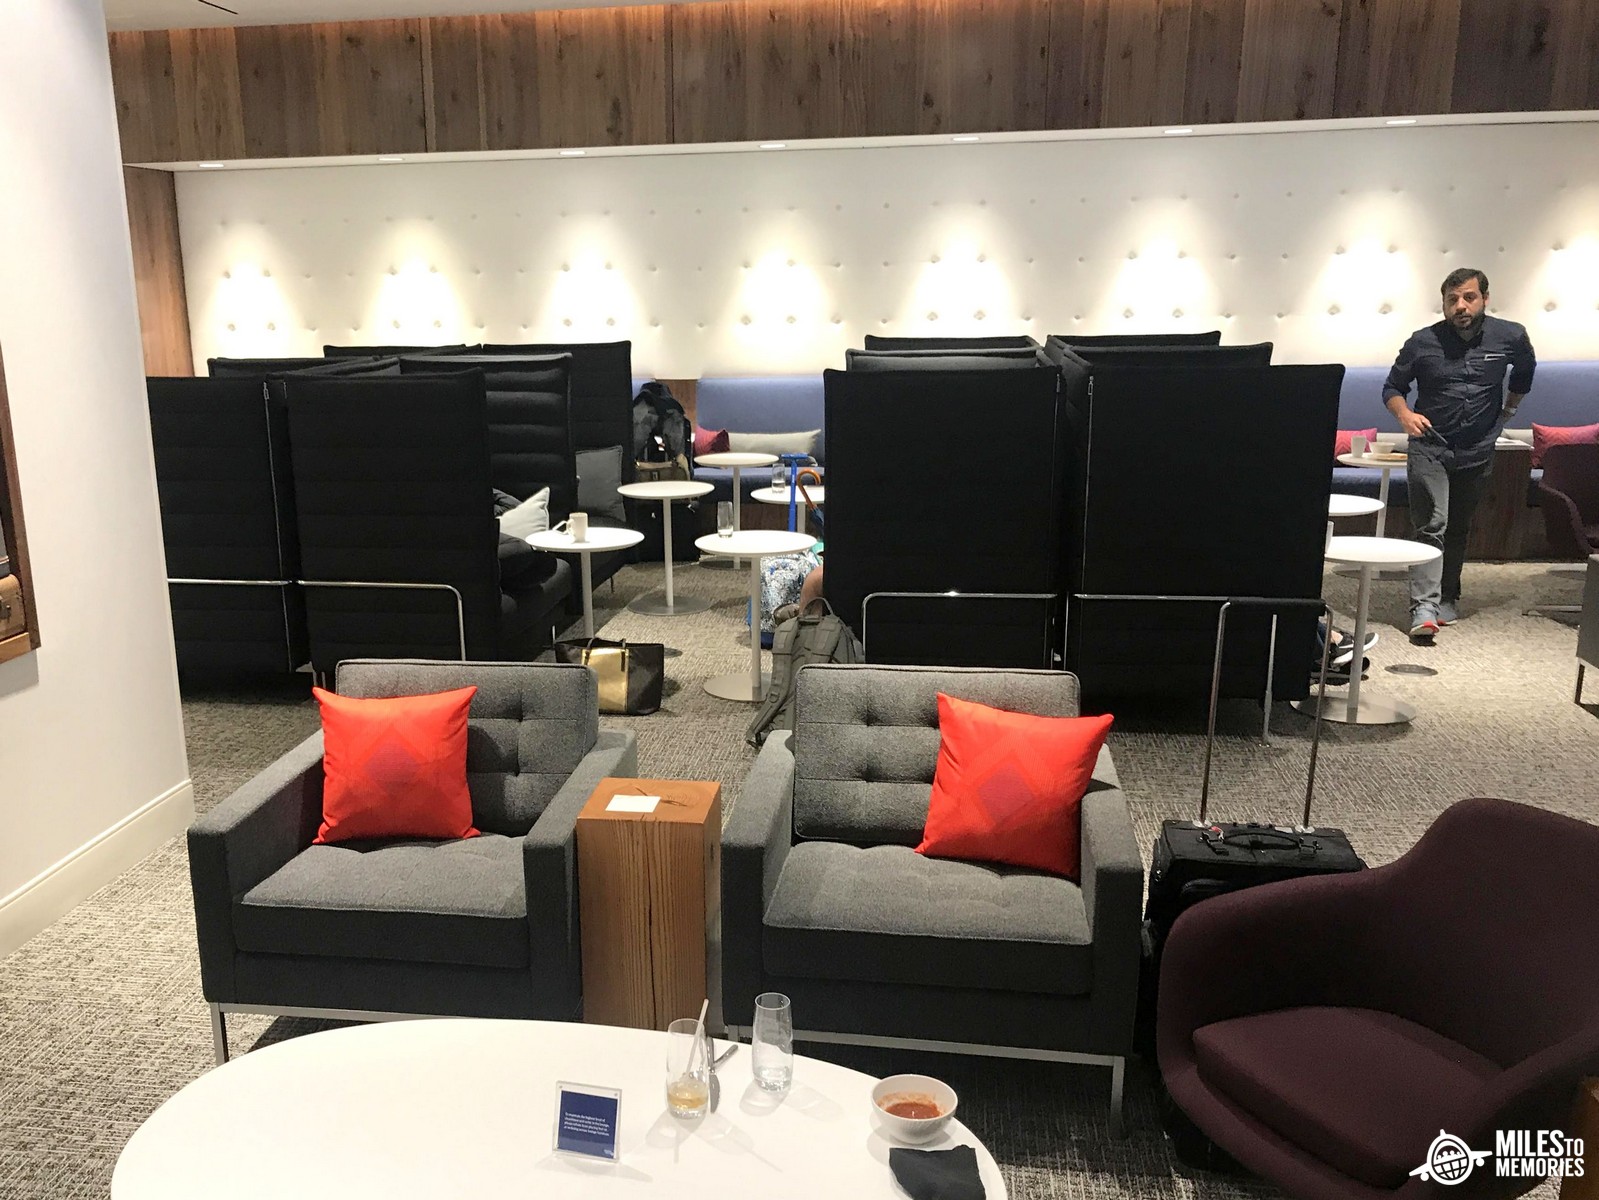 New Dallas DFW Centurion Lounge Review